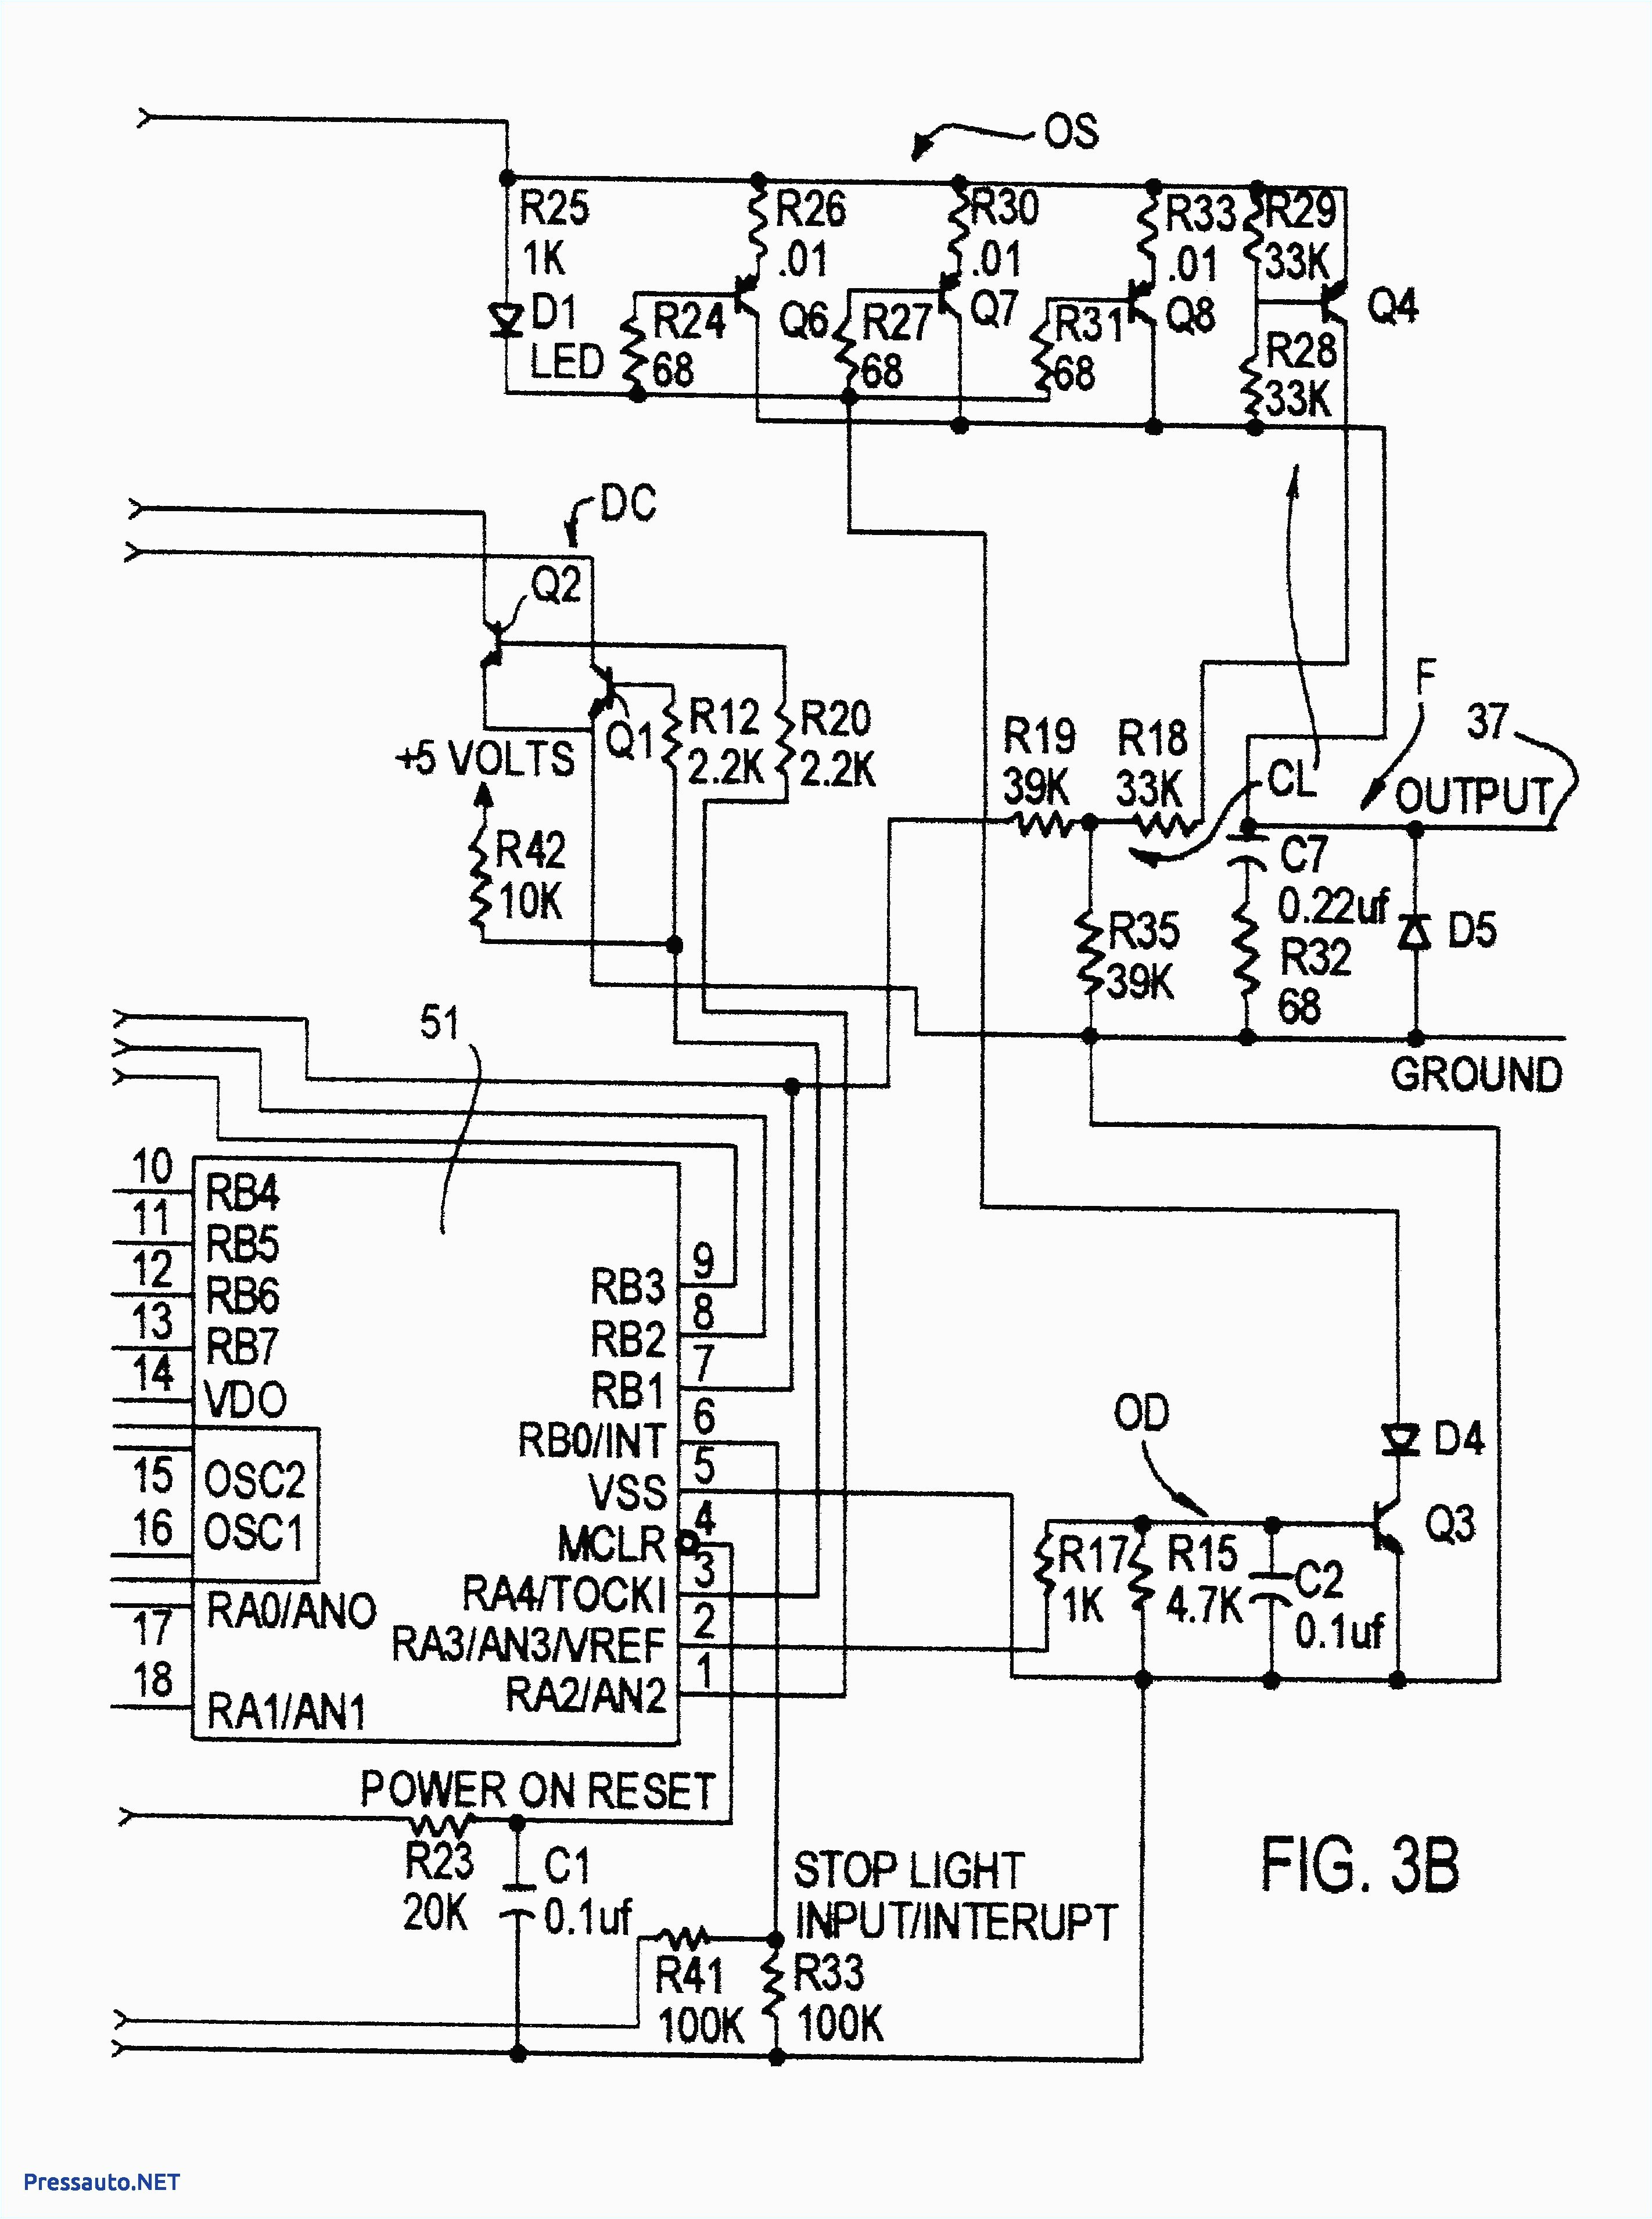 abb wiring diagrams free download diagram schematic wiring diagram abb ats021 wiring diagram abb vfd control